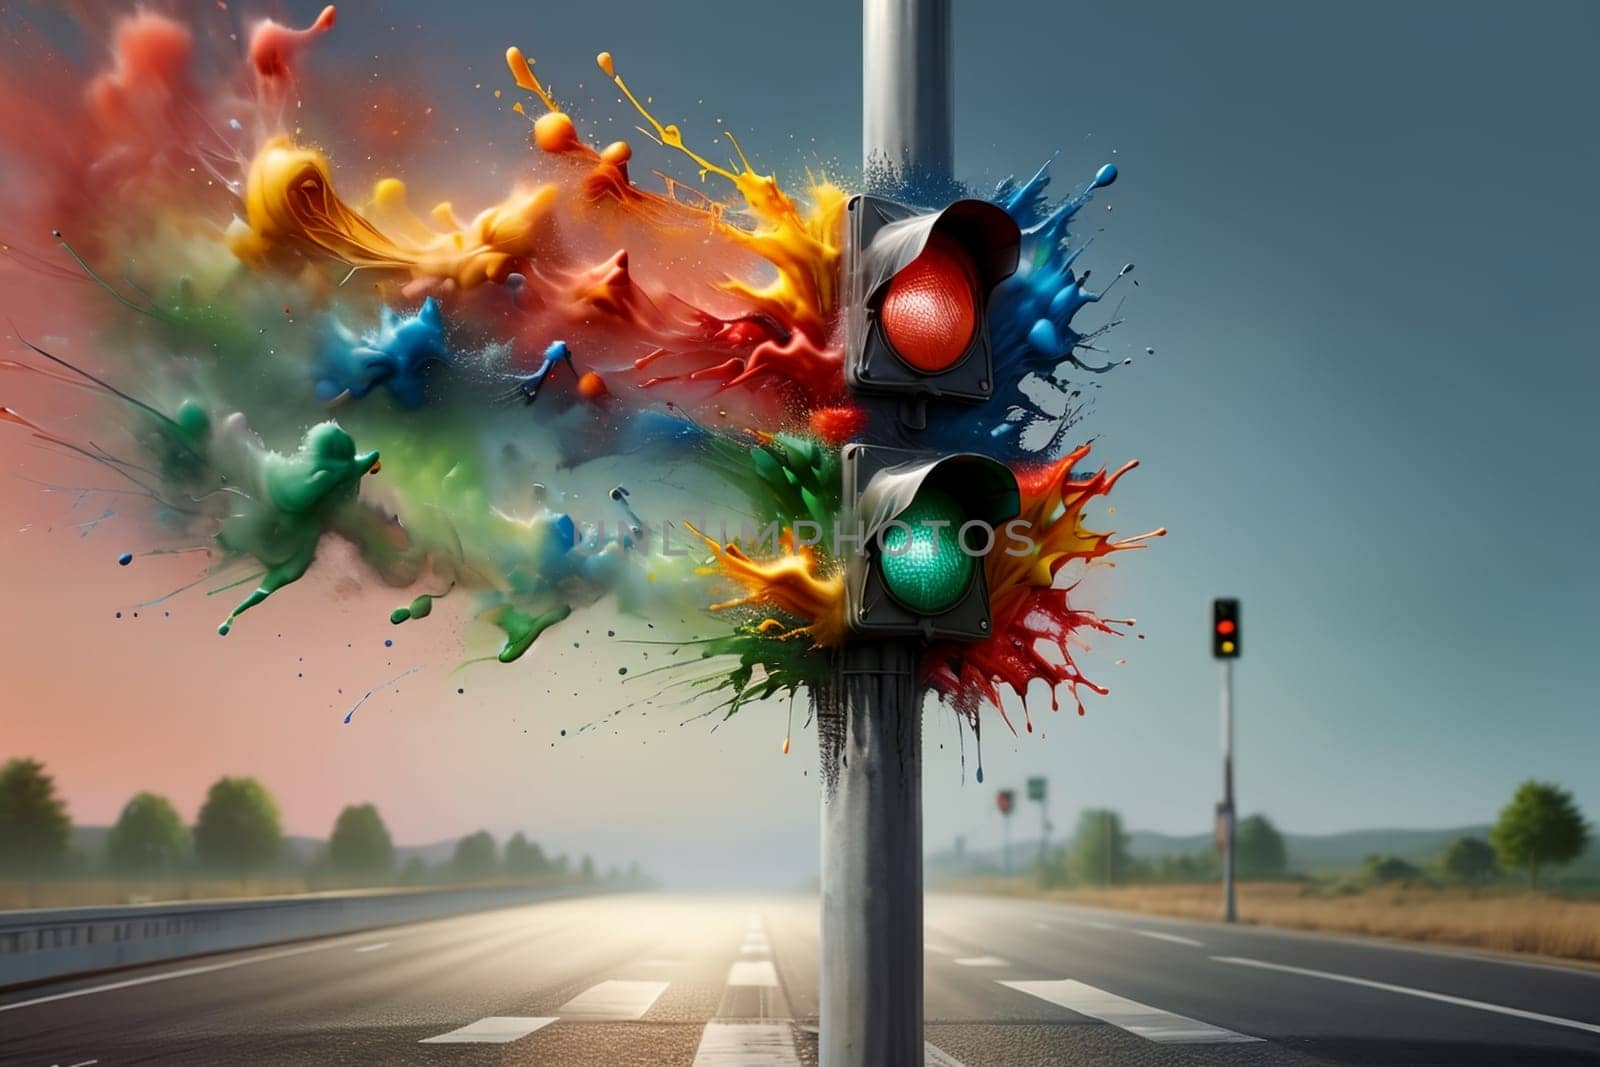 bright multi-colored traffic light on a pole .